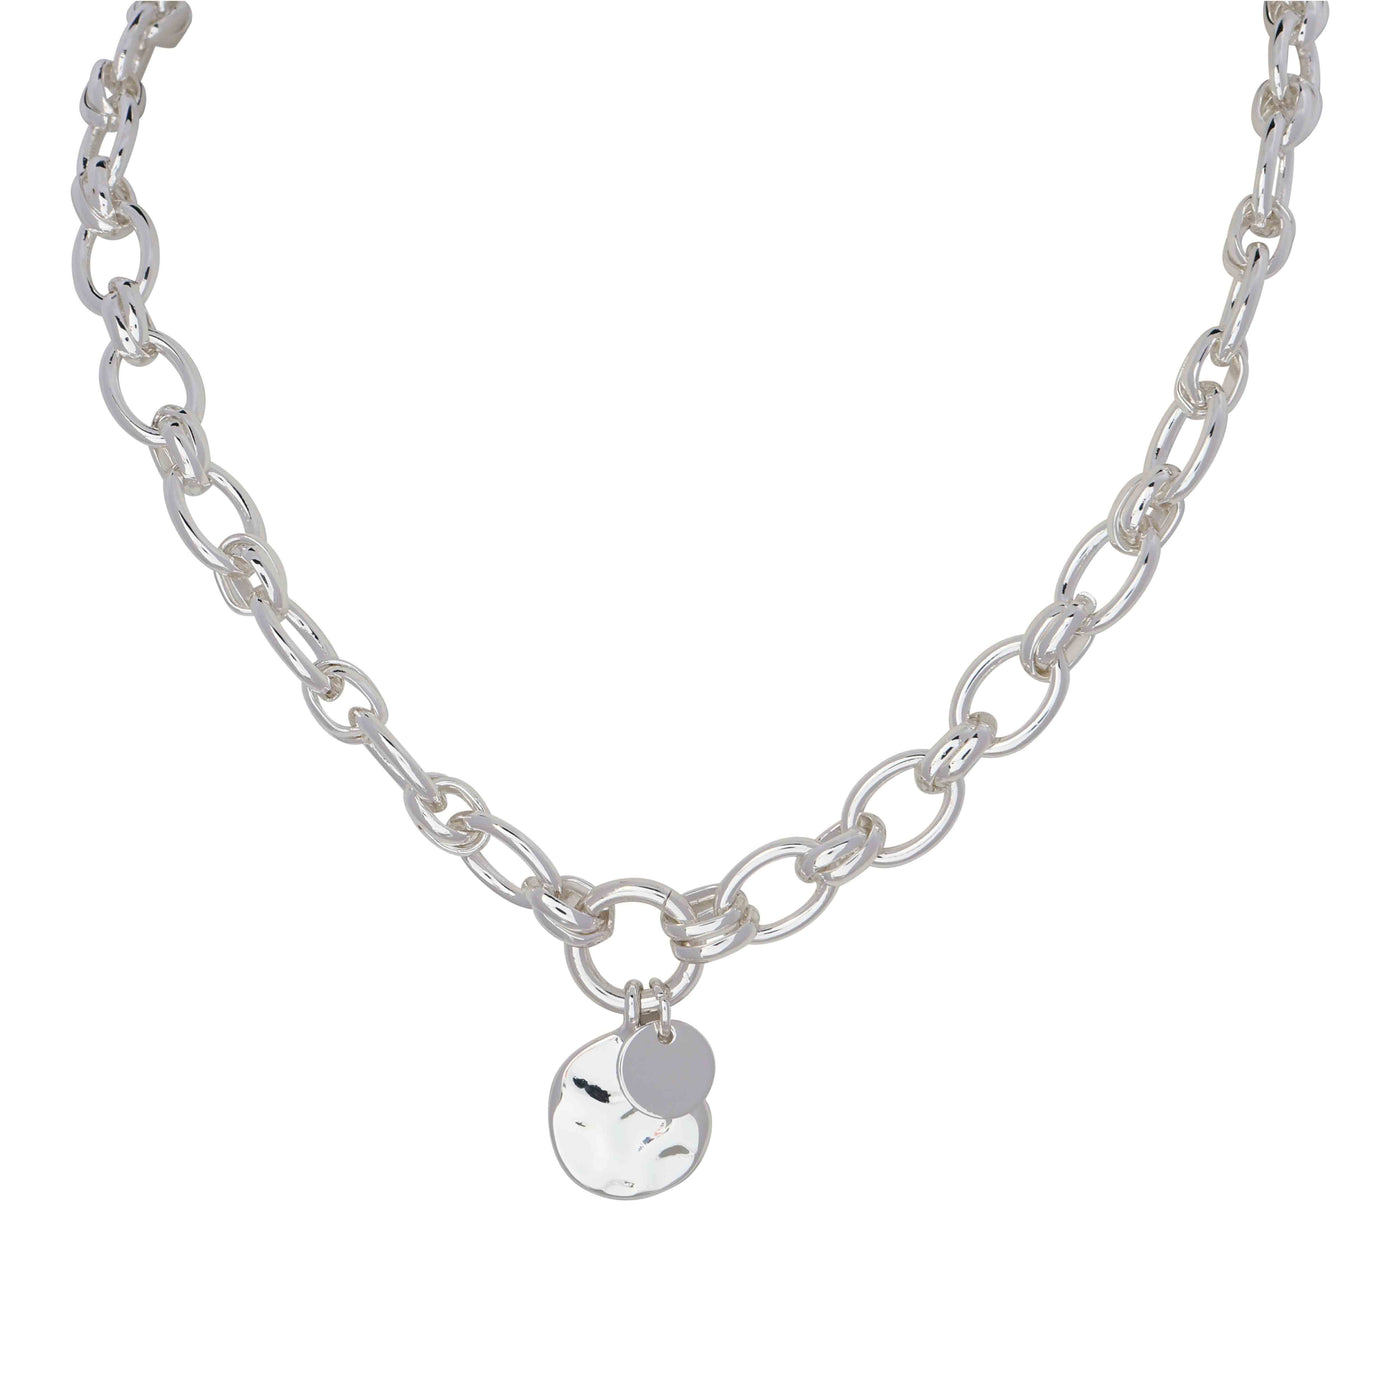 Fashion Chain Necklace Silver